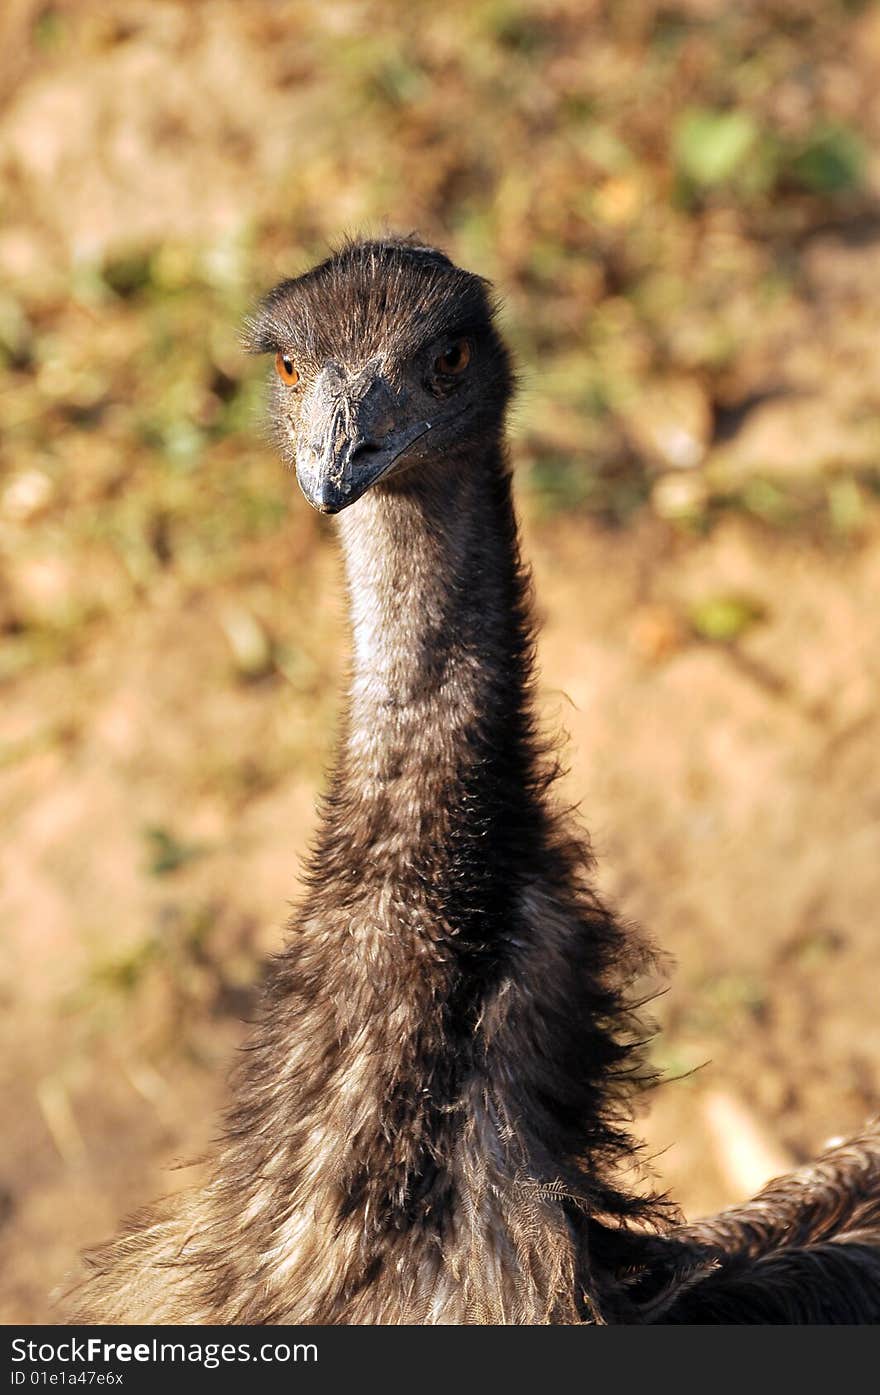 Closeup of emu face looking great.